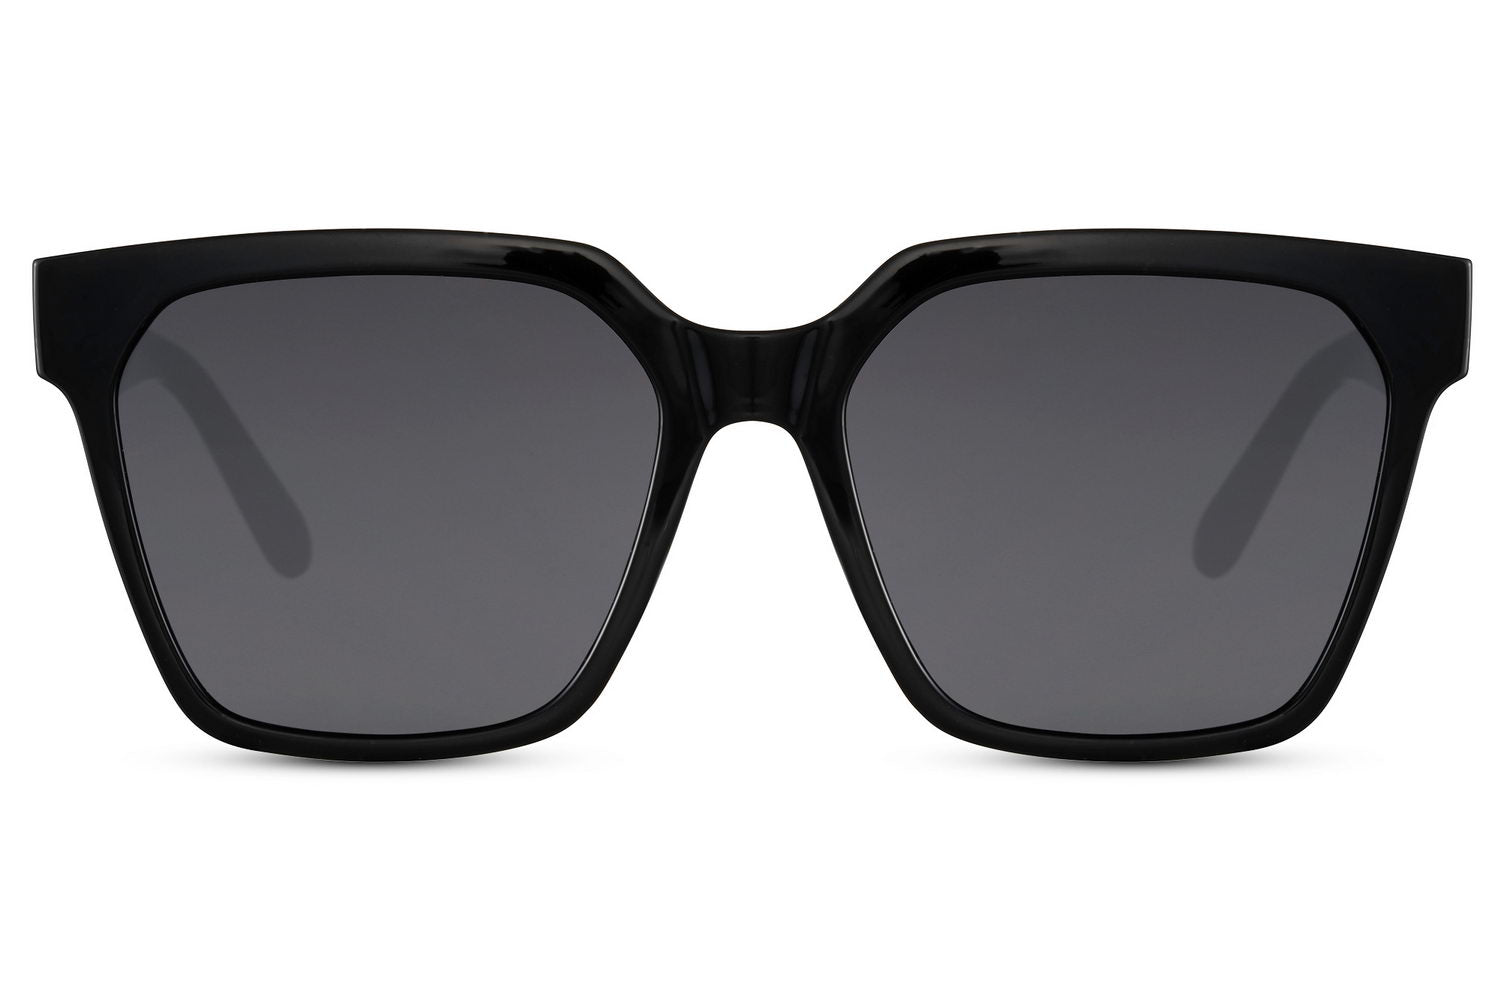 Gafas de Sol - The New Luxury Black